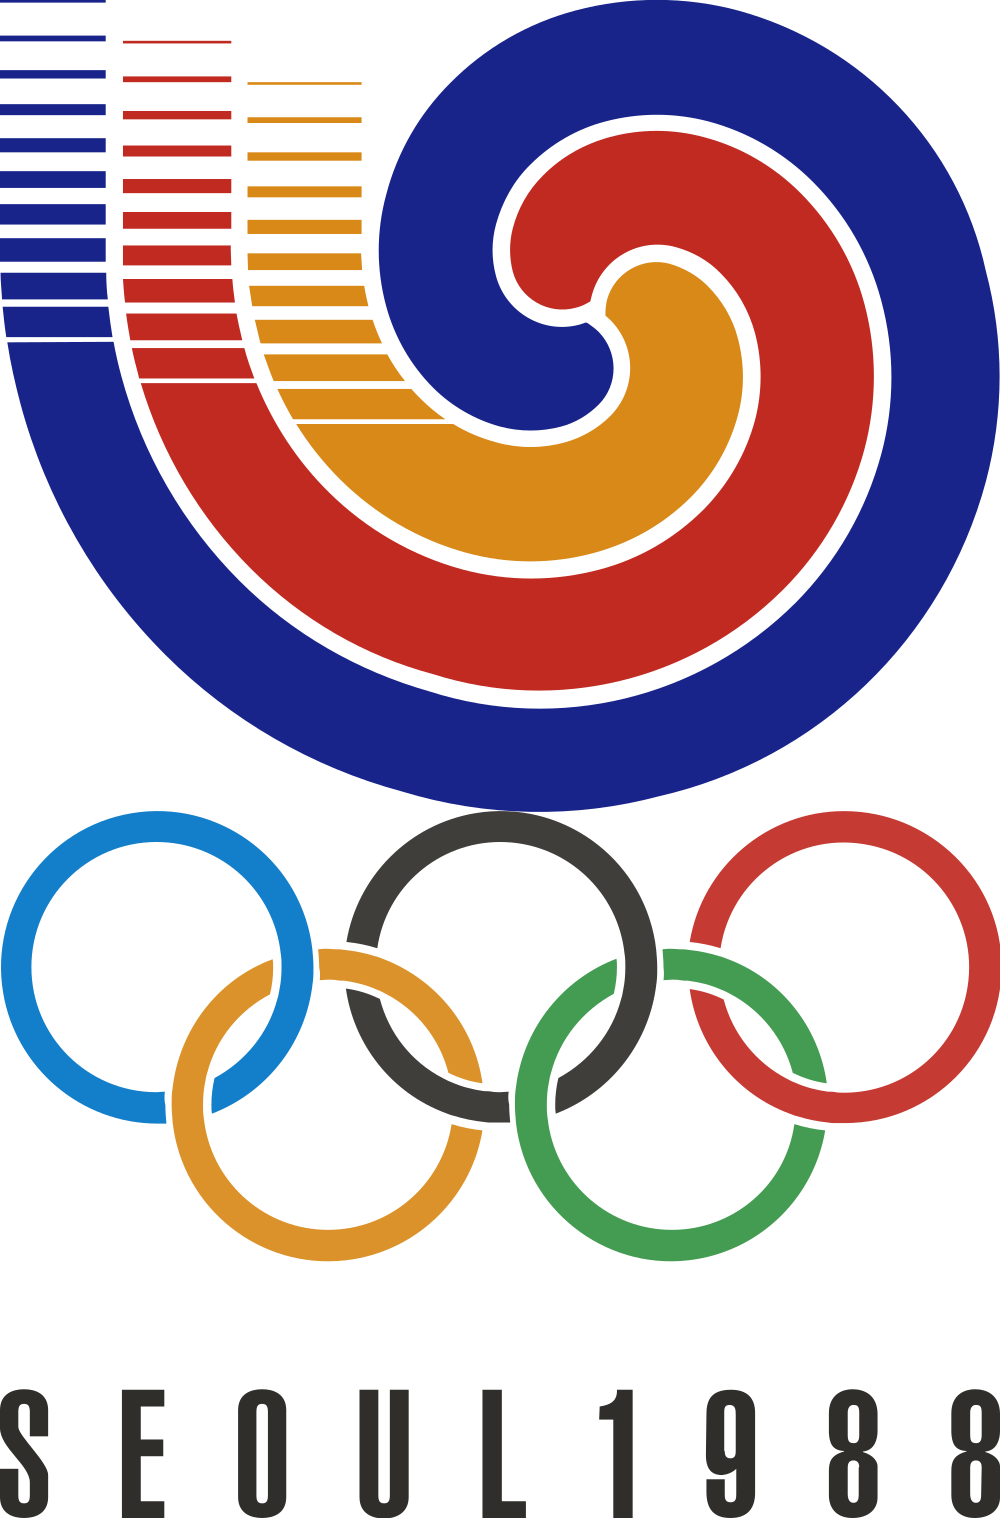 1988 Seol Summer Olympics logo png transparent